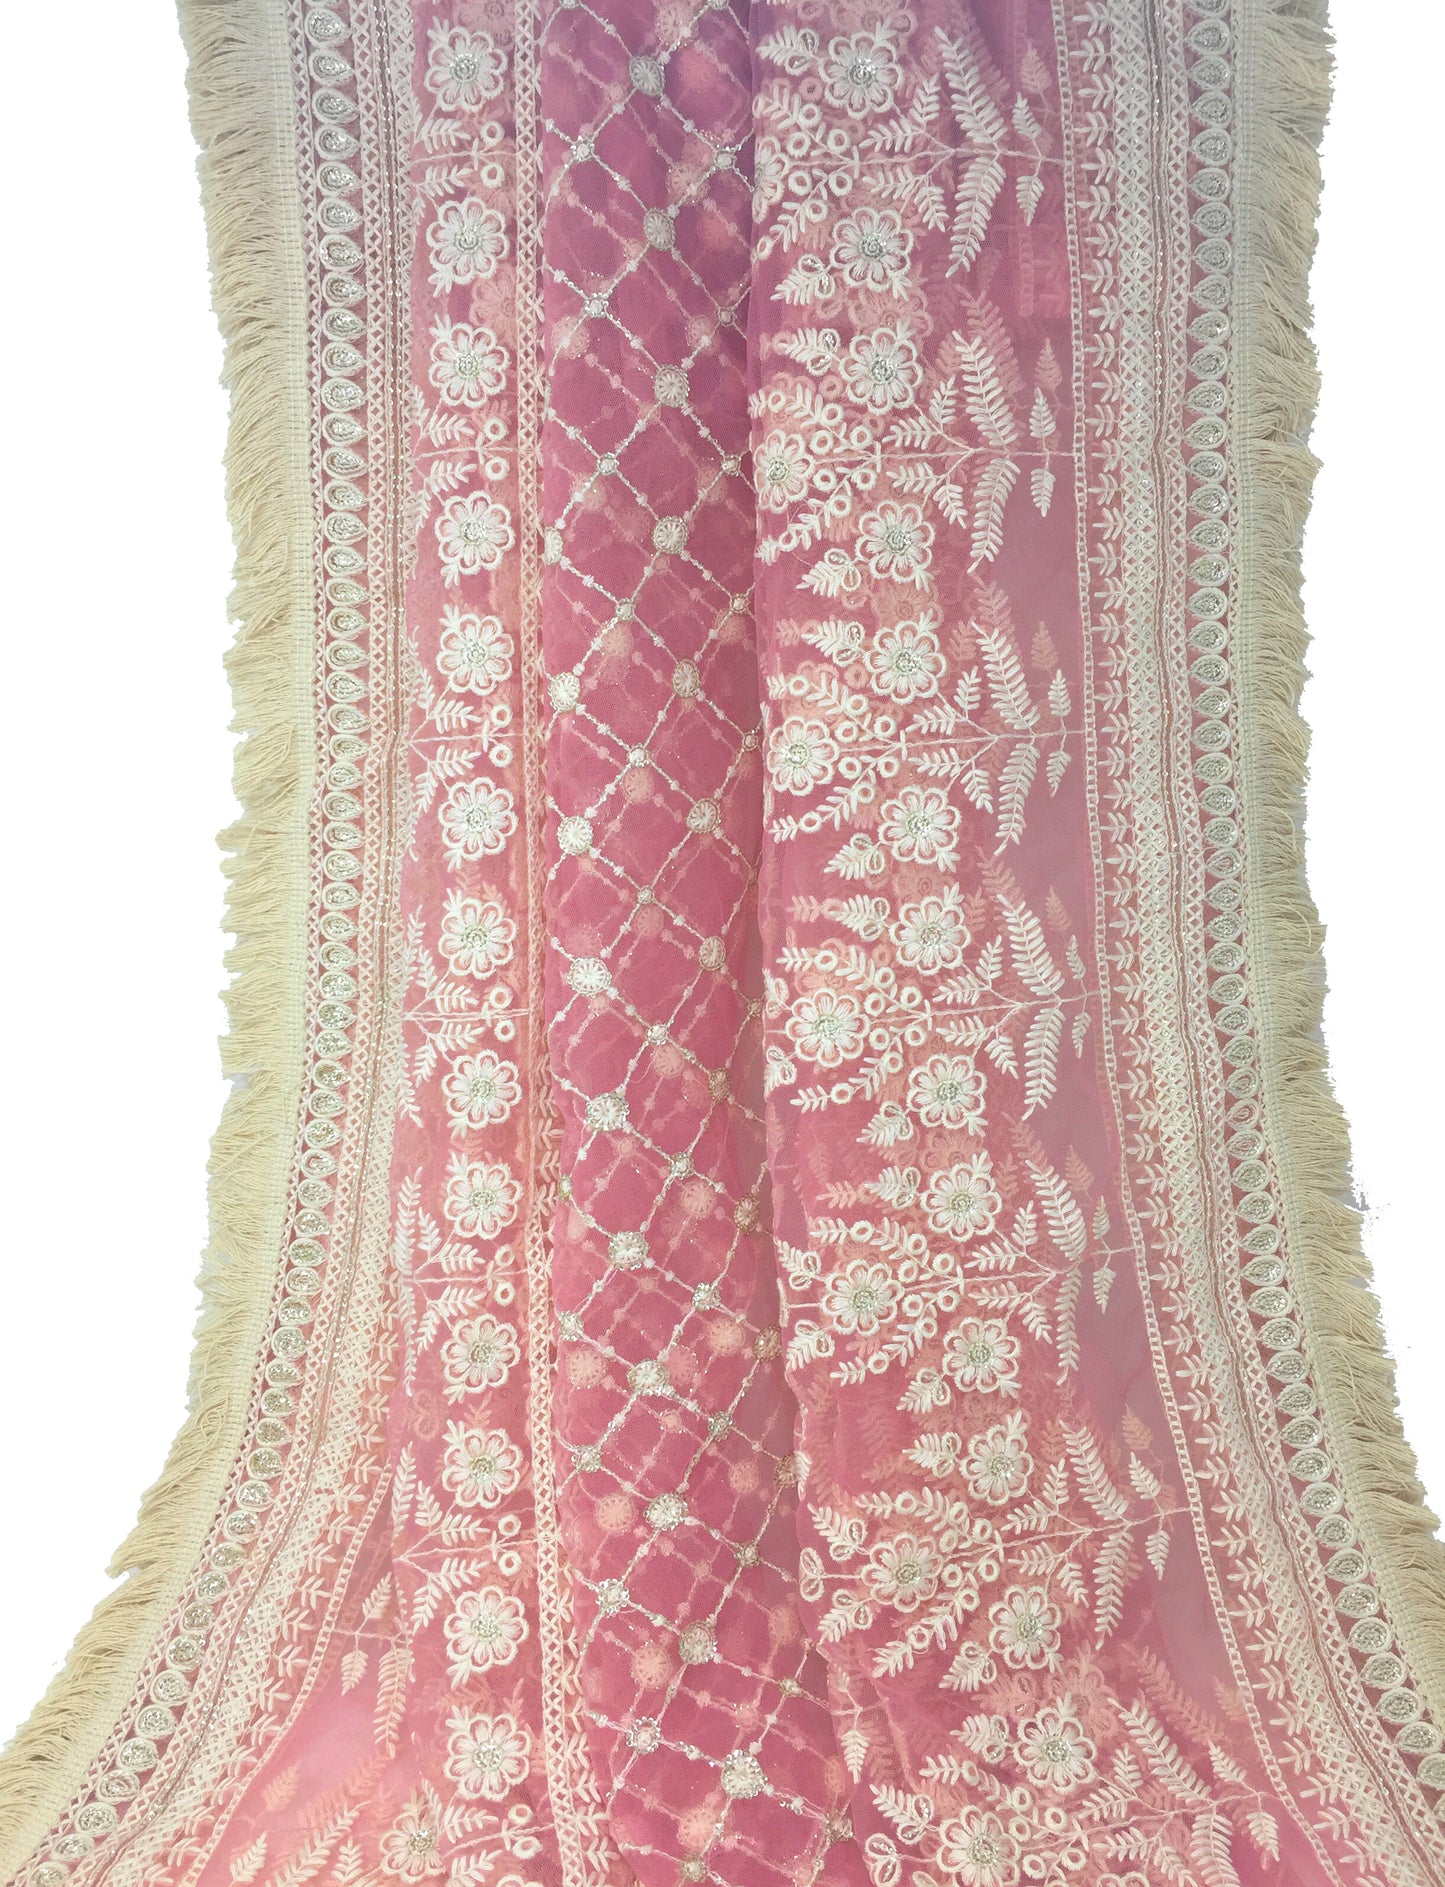 Pink designer dupatta white embroidery on Net